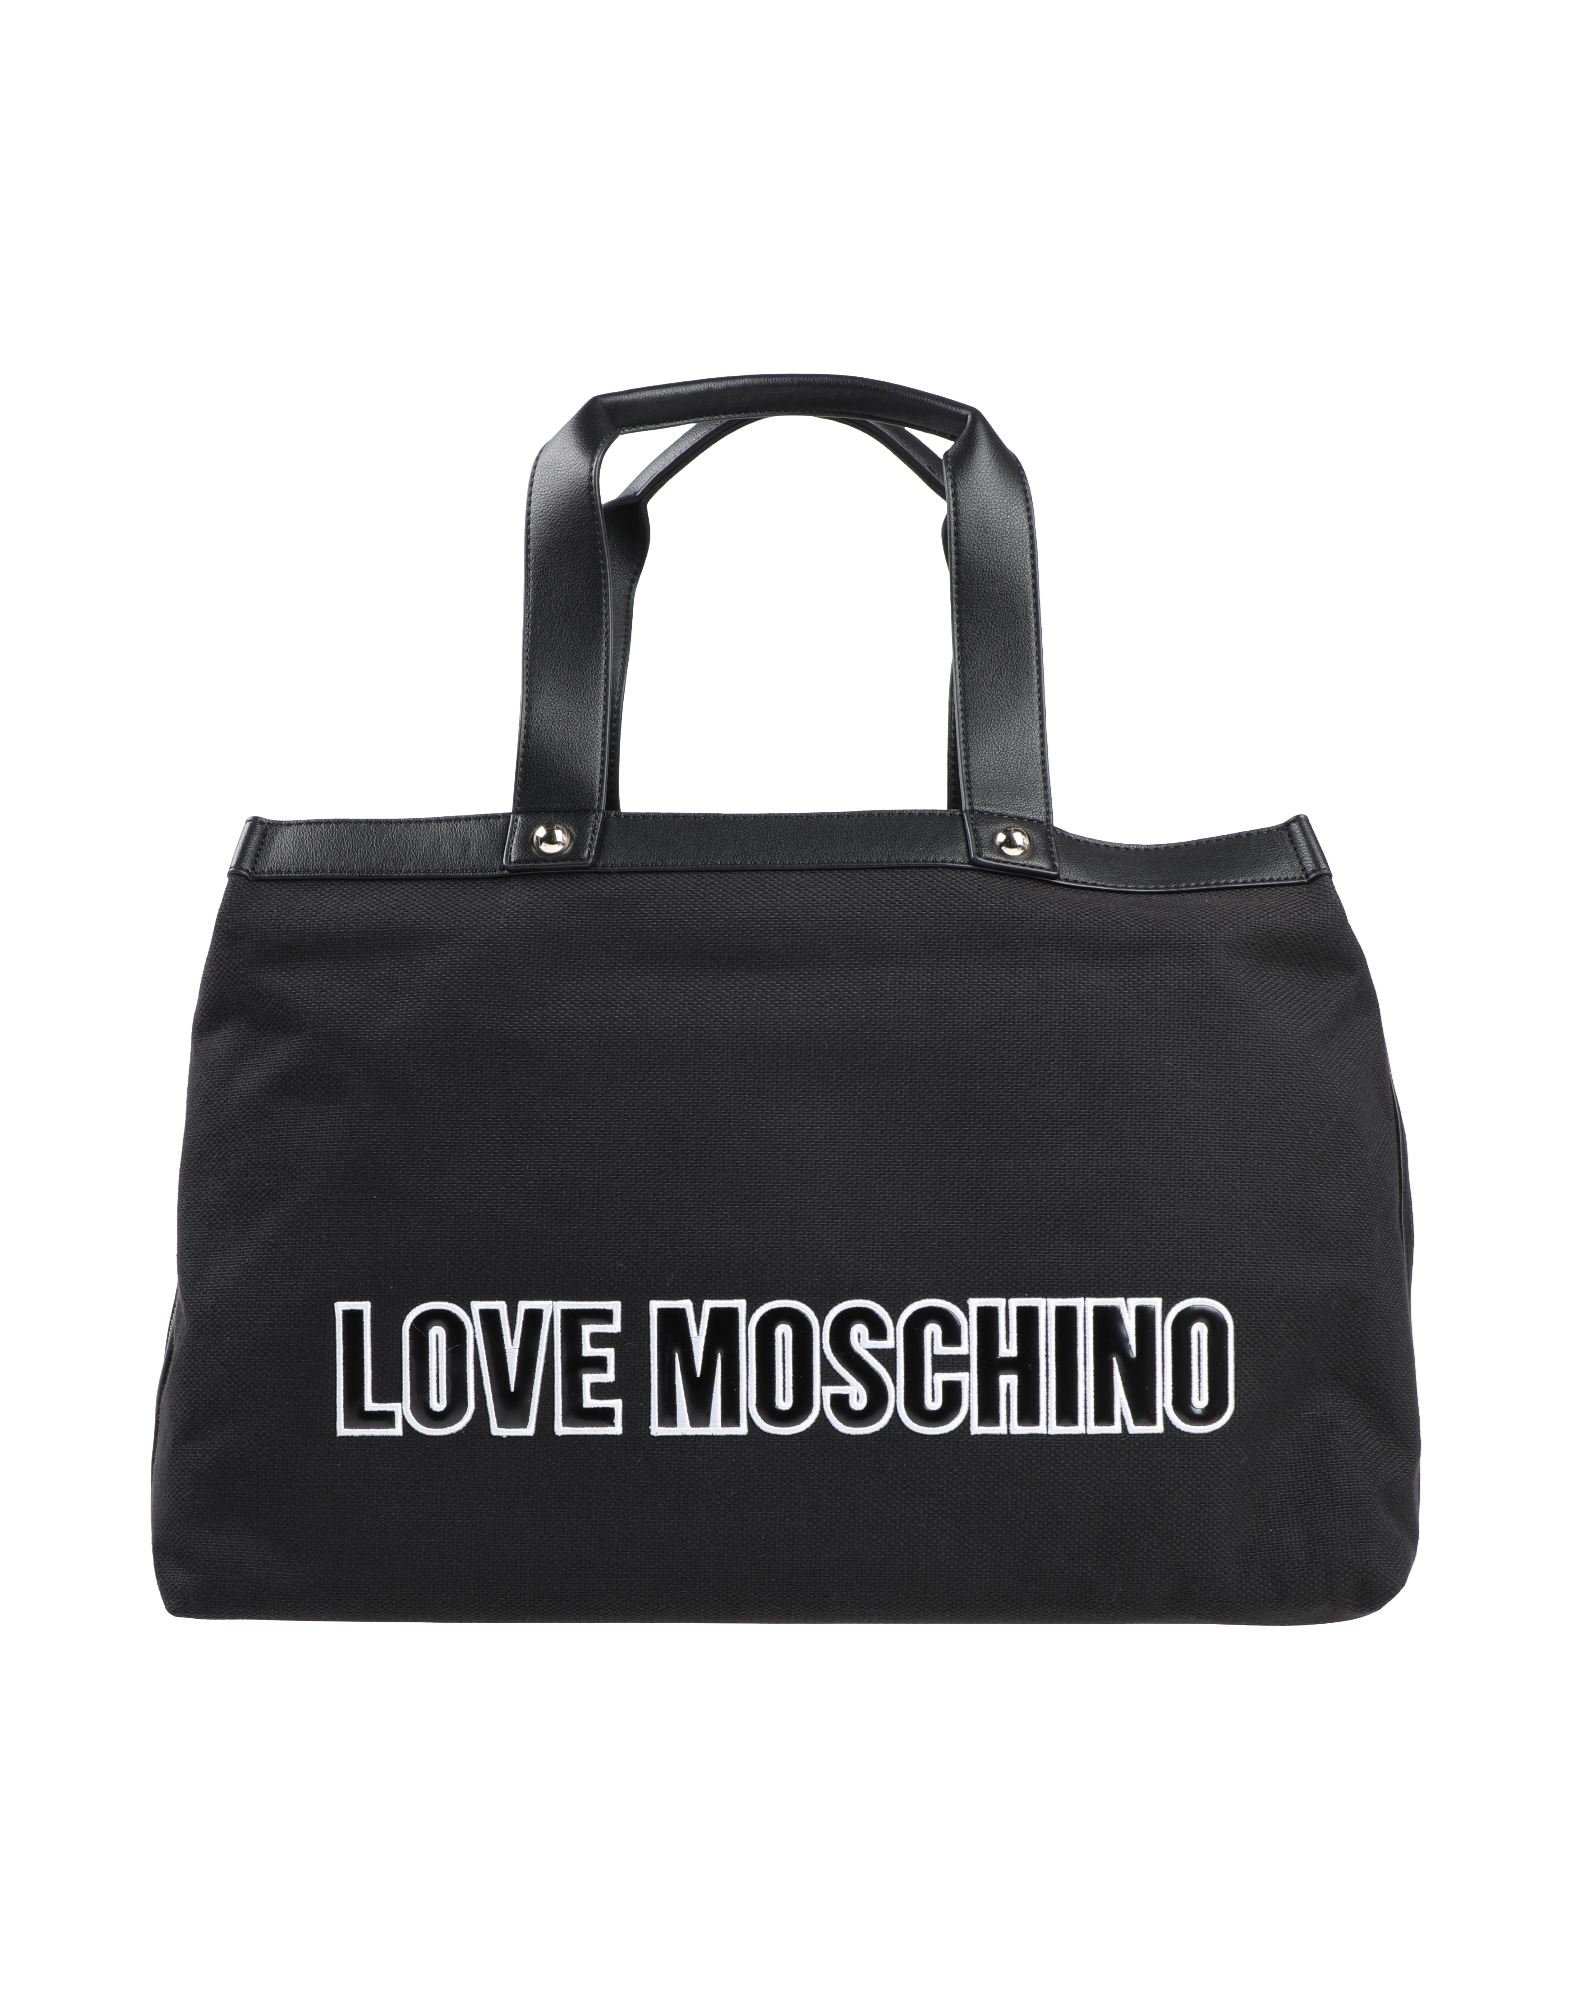 LOVE MOSCHINO Handbags - Item 45553170